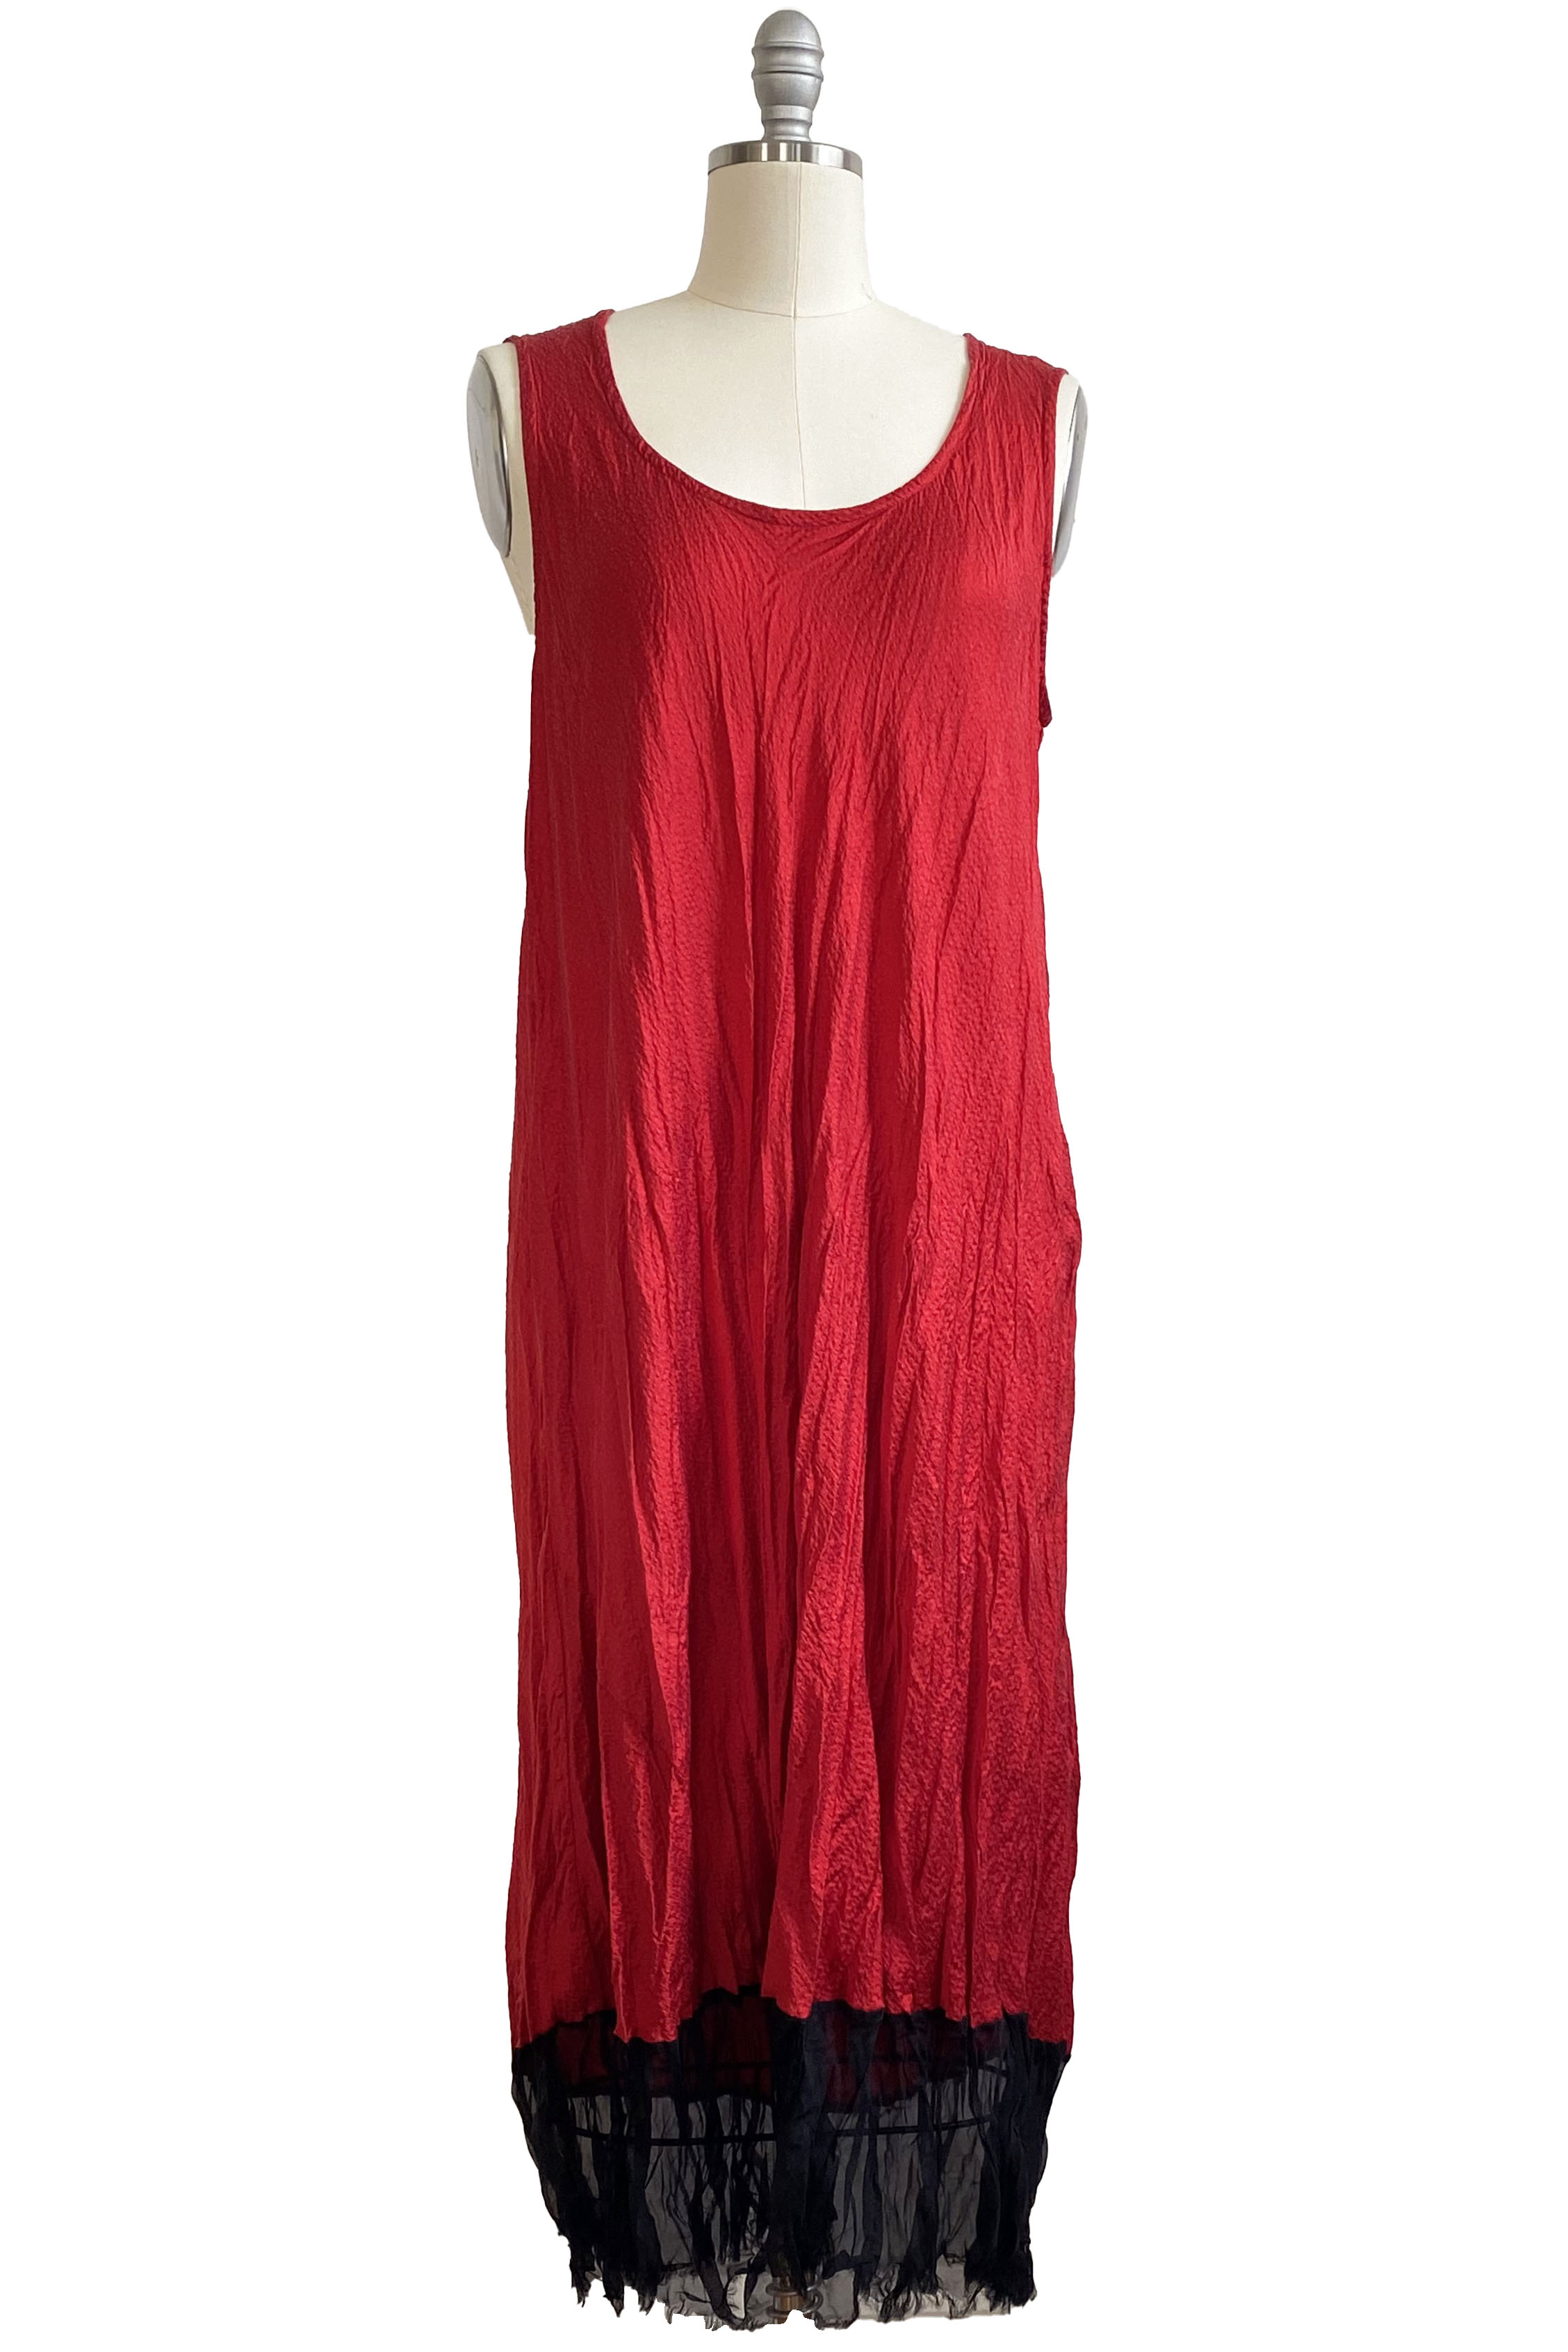 Touria Dress w/ Organza Trim Solid - Red & Black